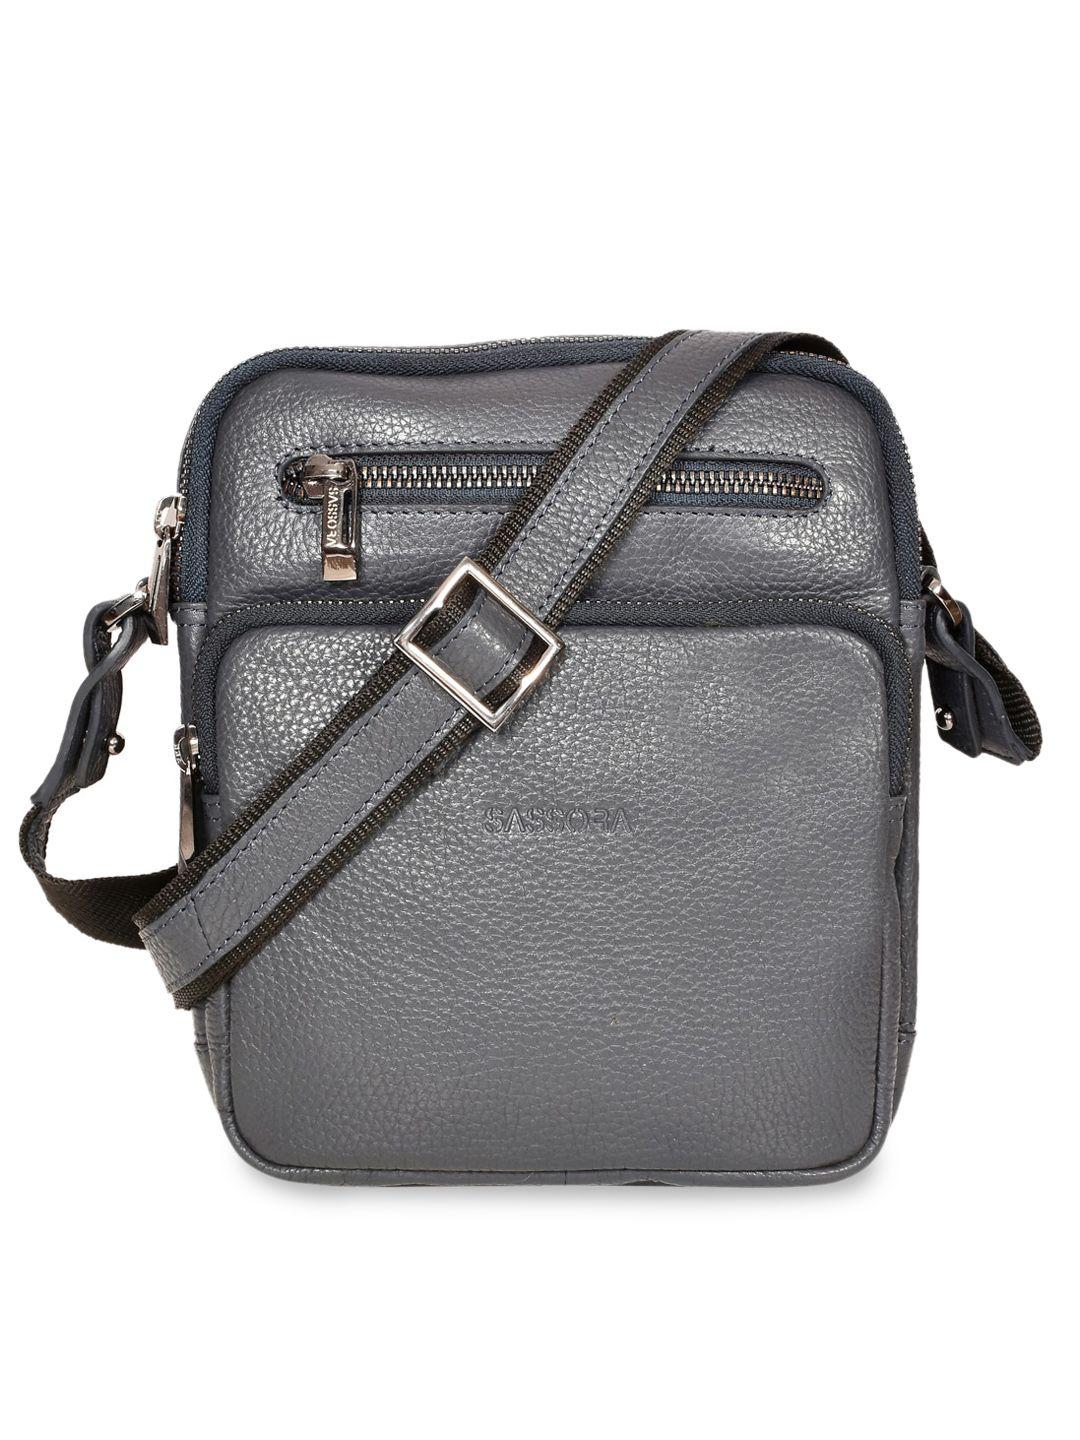 sassora textured leather structured sling bag